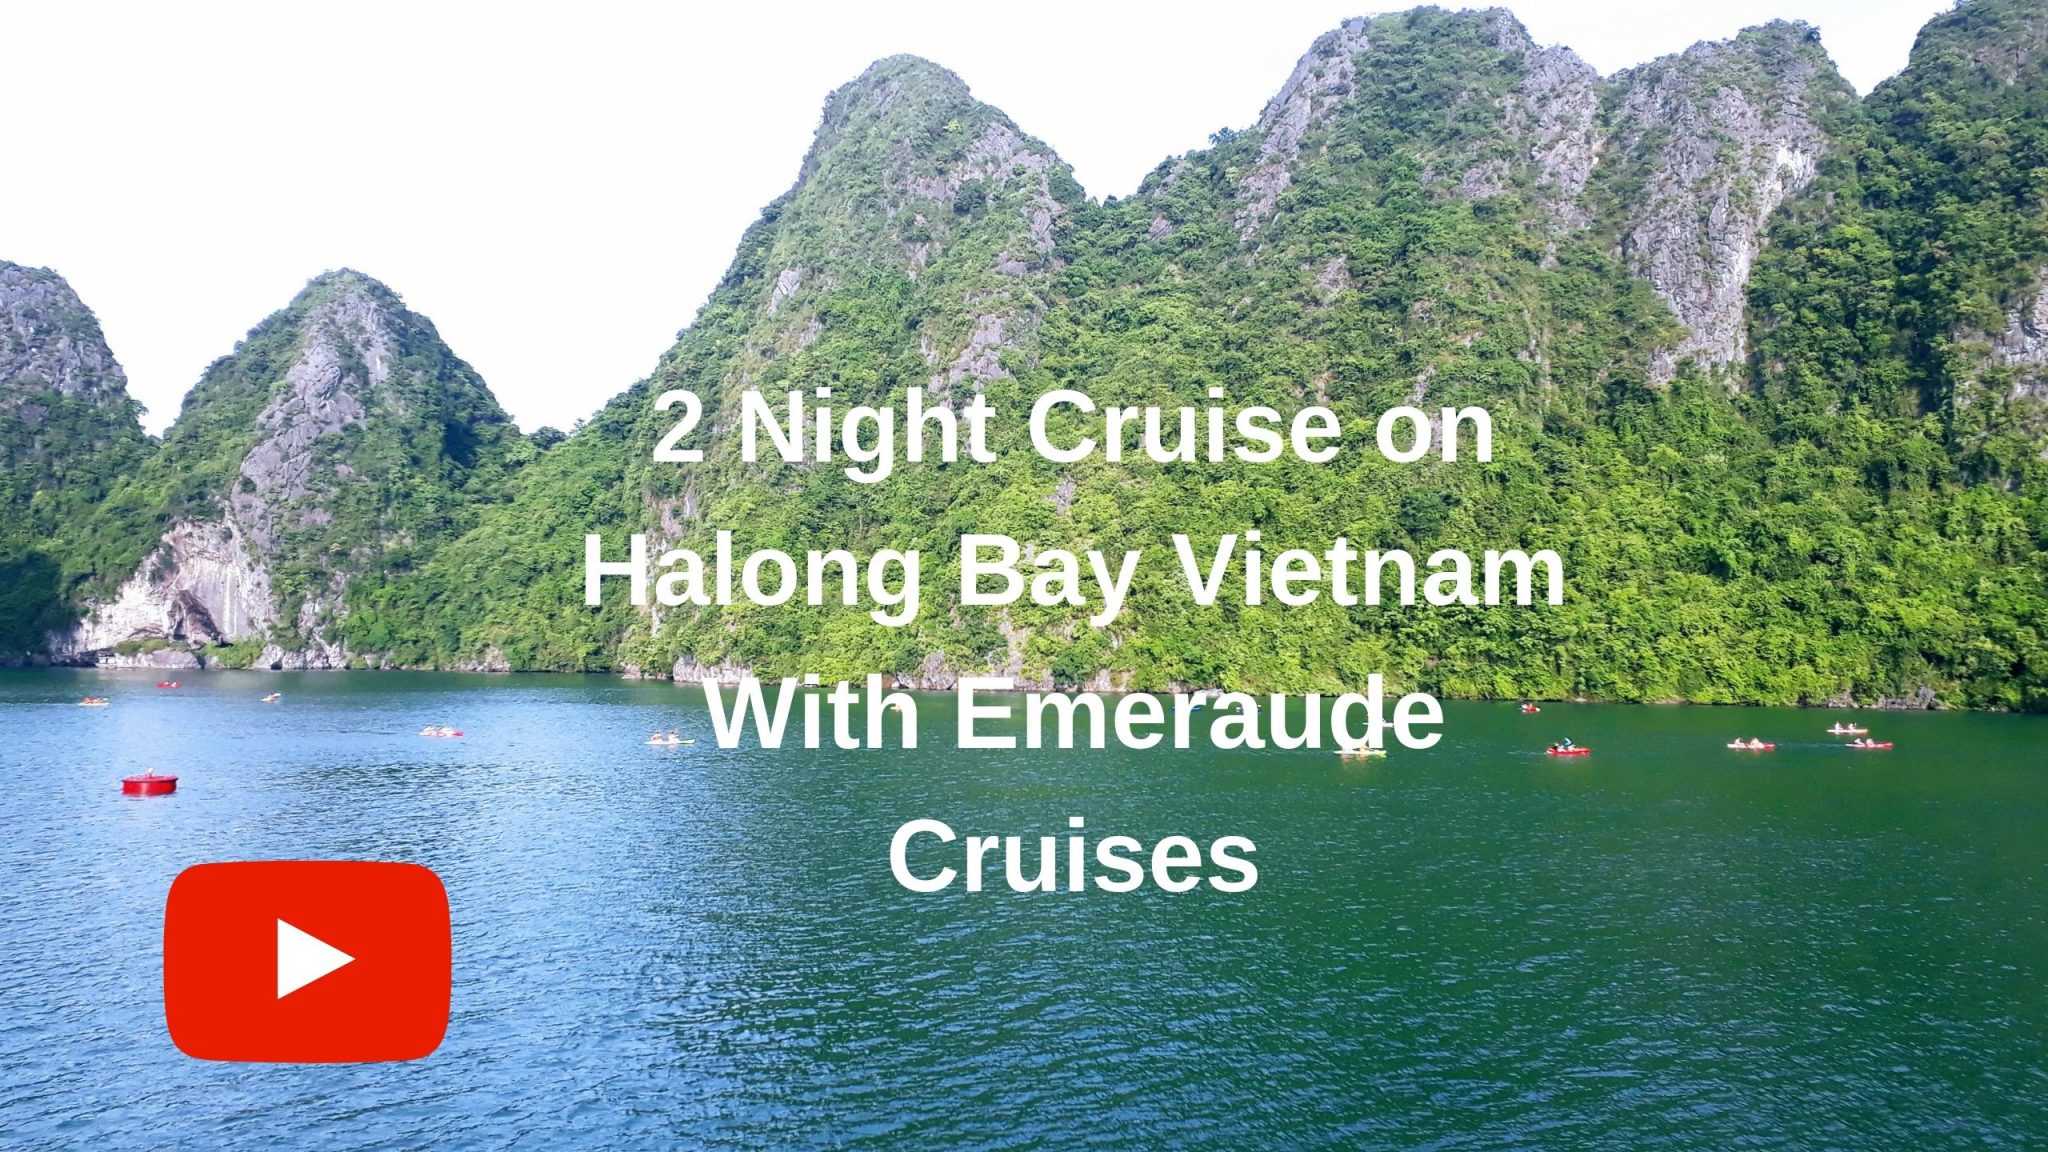 2 night cruise on Halong Bay